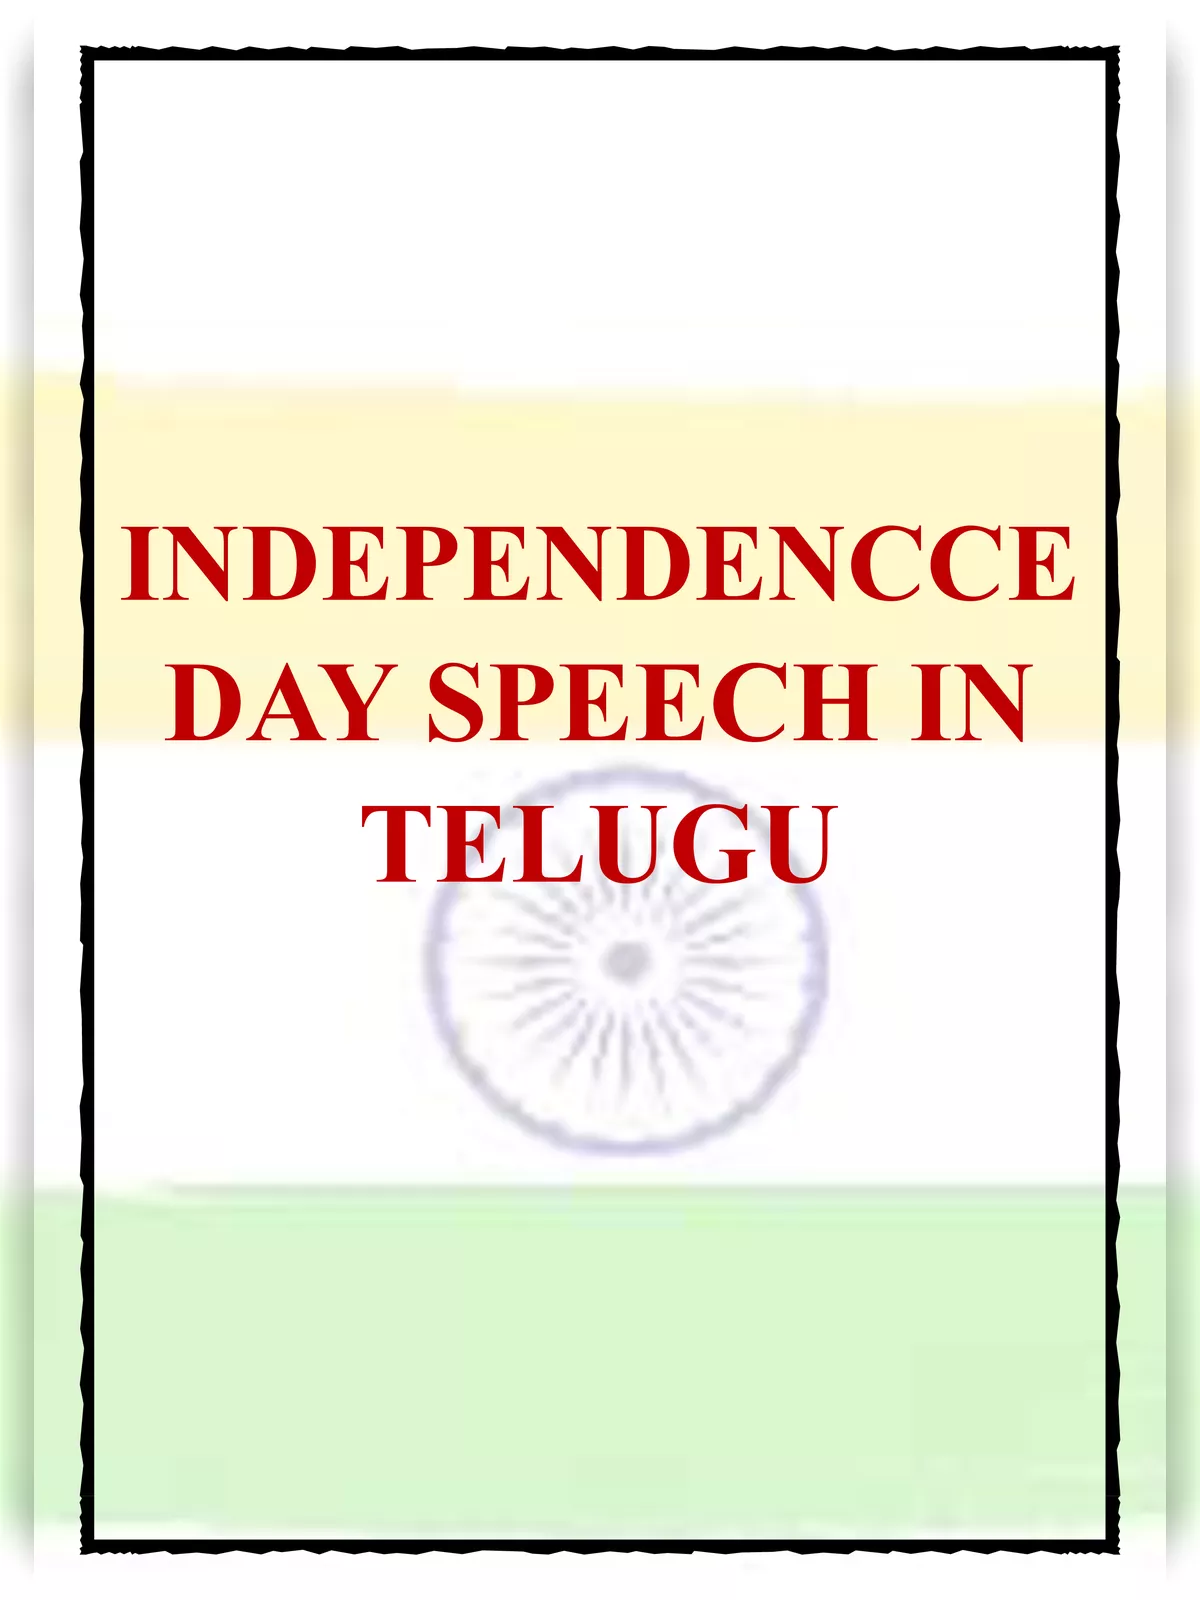 Independence Day Speech in Telugu